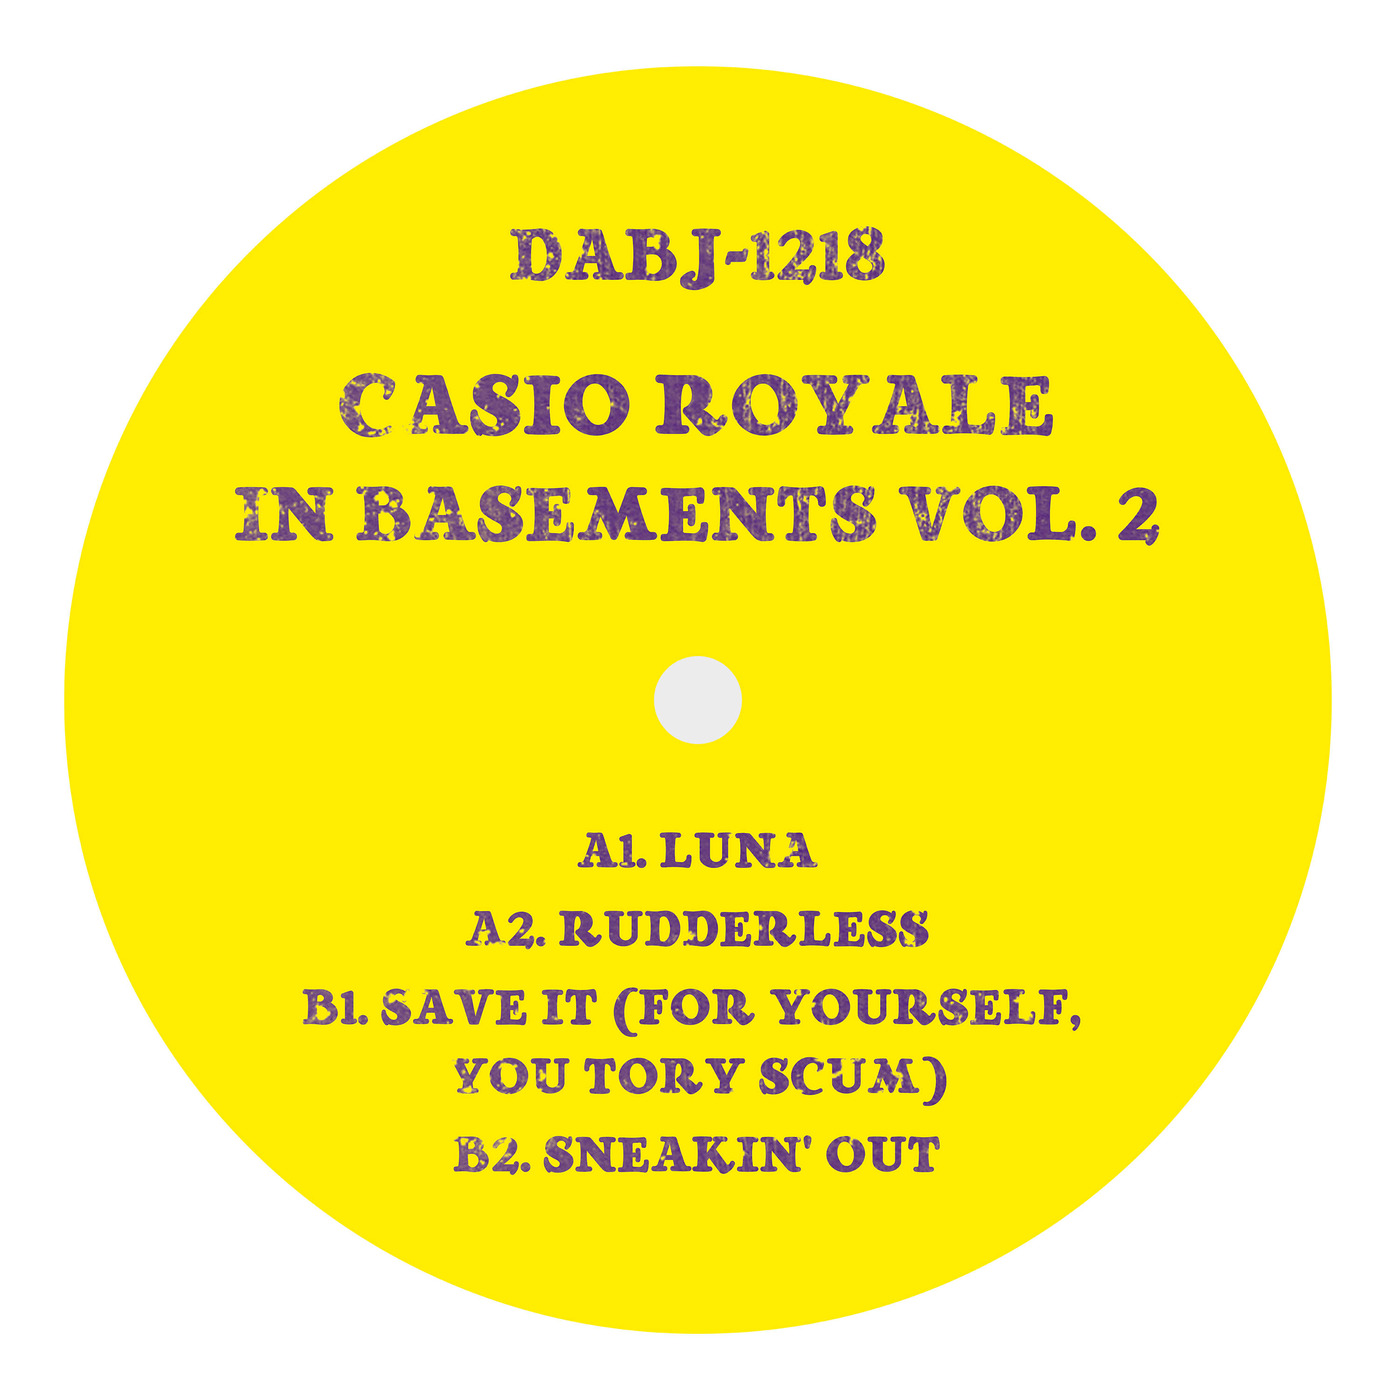 image cover: Casio Royale - In Basements Vol. 2 / Dixon Avenue Basement Jams / DABJ-1218